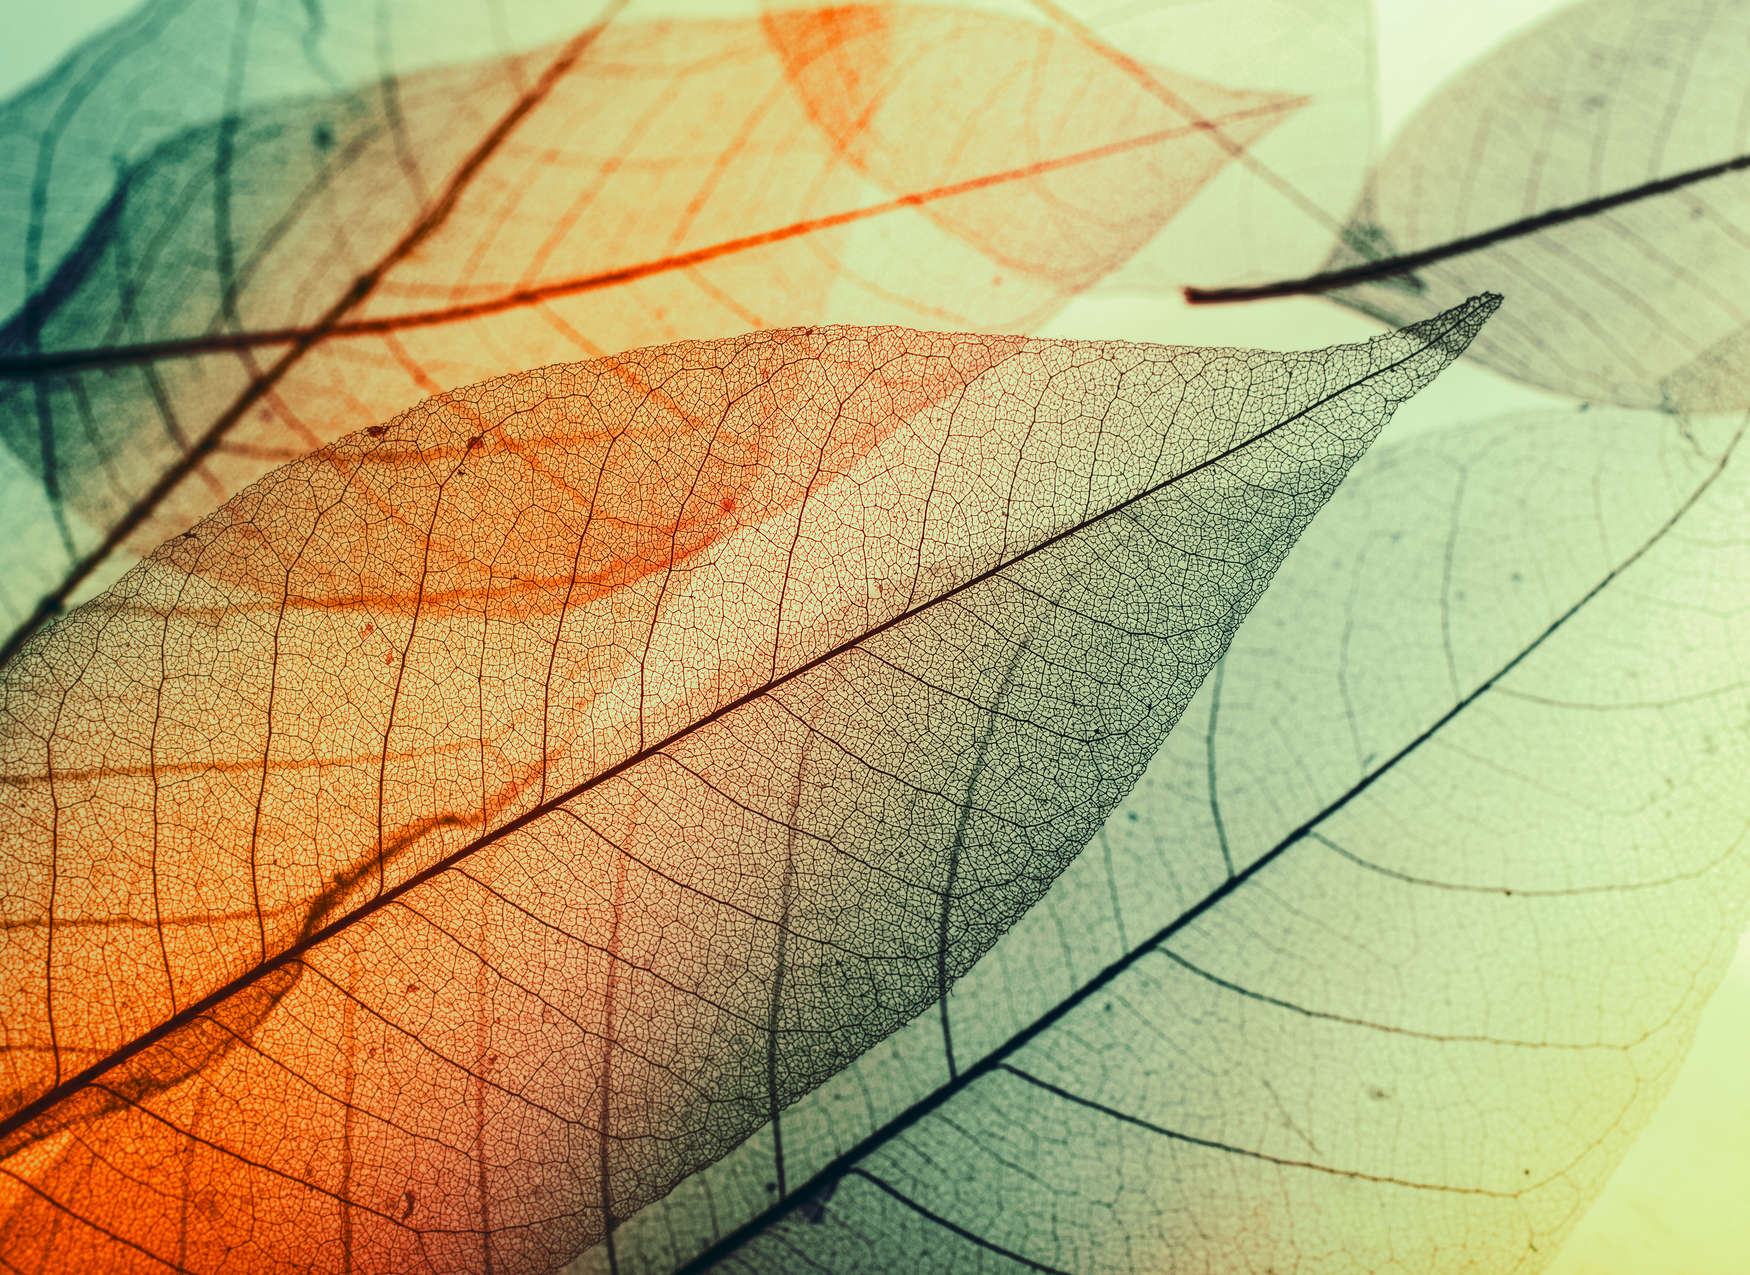             Leaf Design Behang - Groen, Oranje, Zwart
        